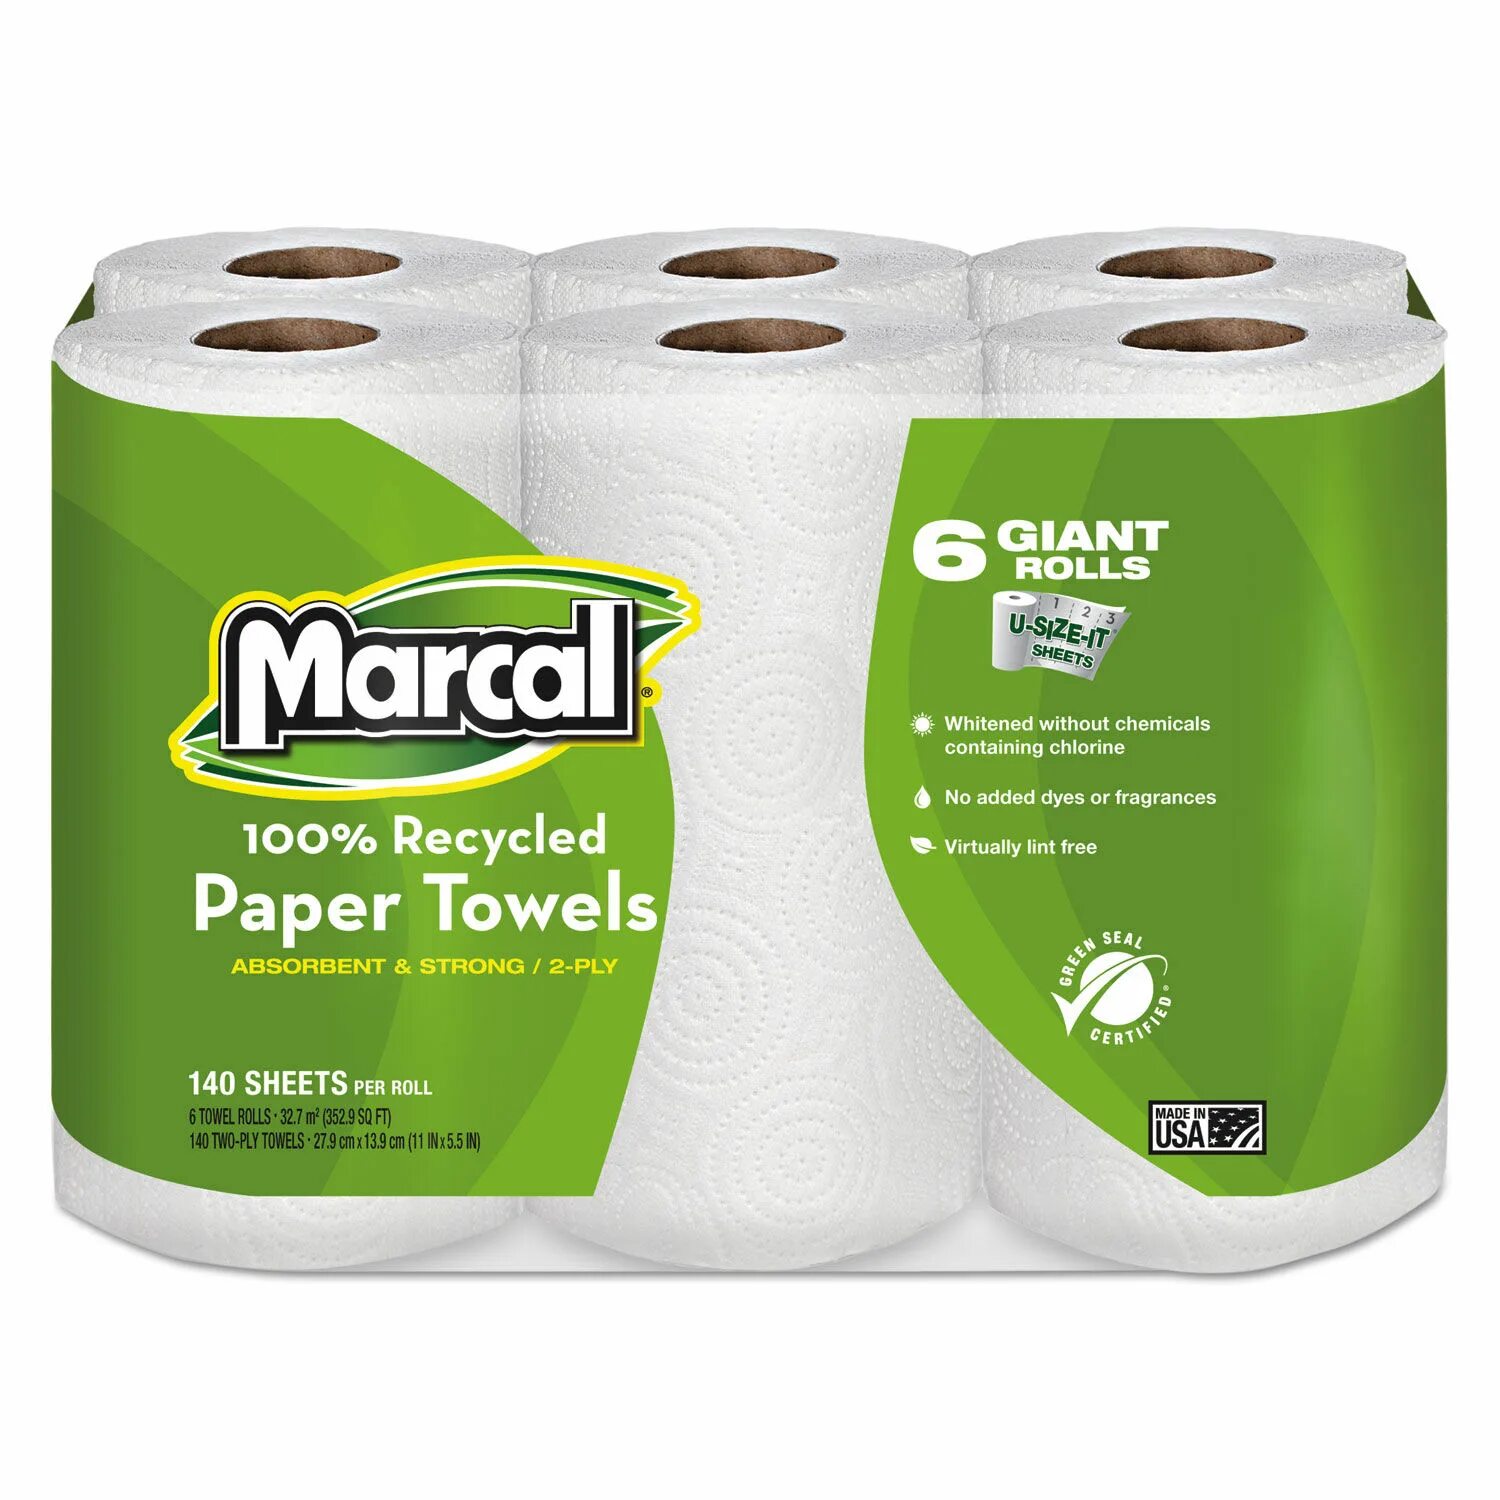 Roll 1 6. Paper Towel бумажные полотенца. Бумажные полотенца grass. Бумажные полотенца для СТО. Полотенца бумажные рулонные Maxi.